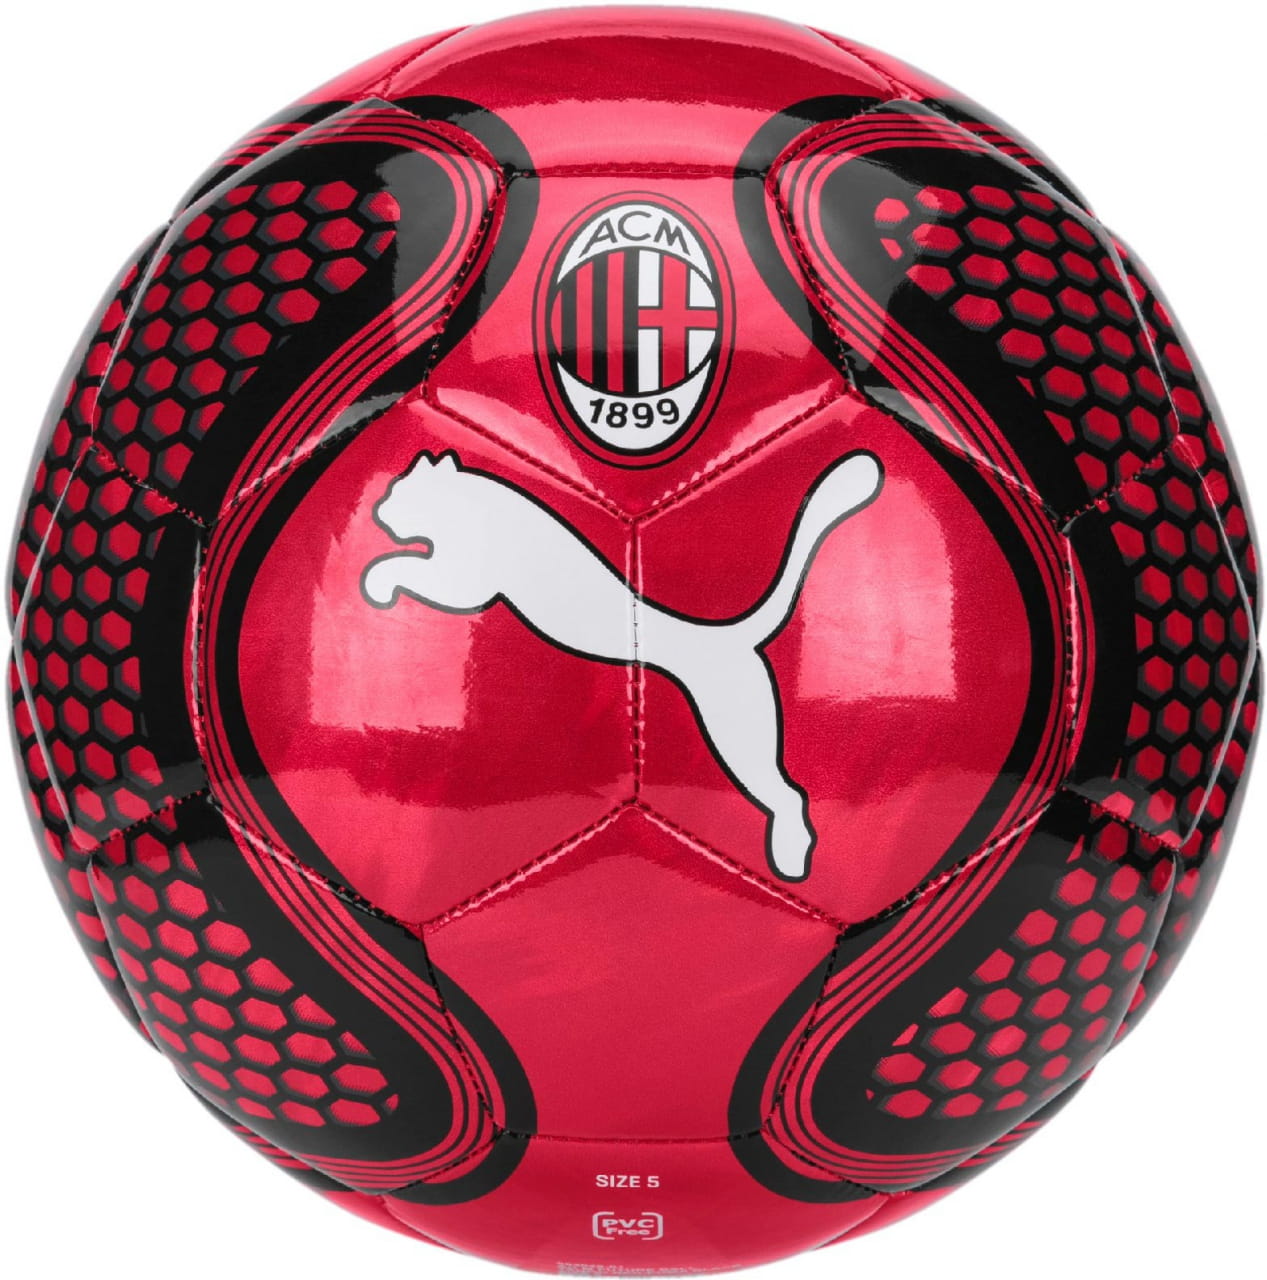 Bile Puma AC Milan Future Ball